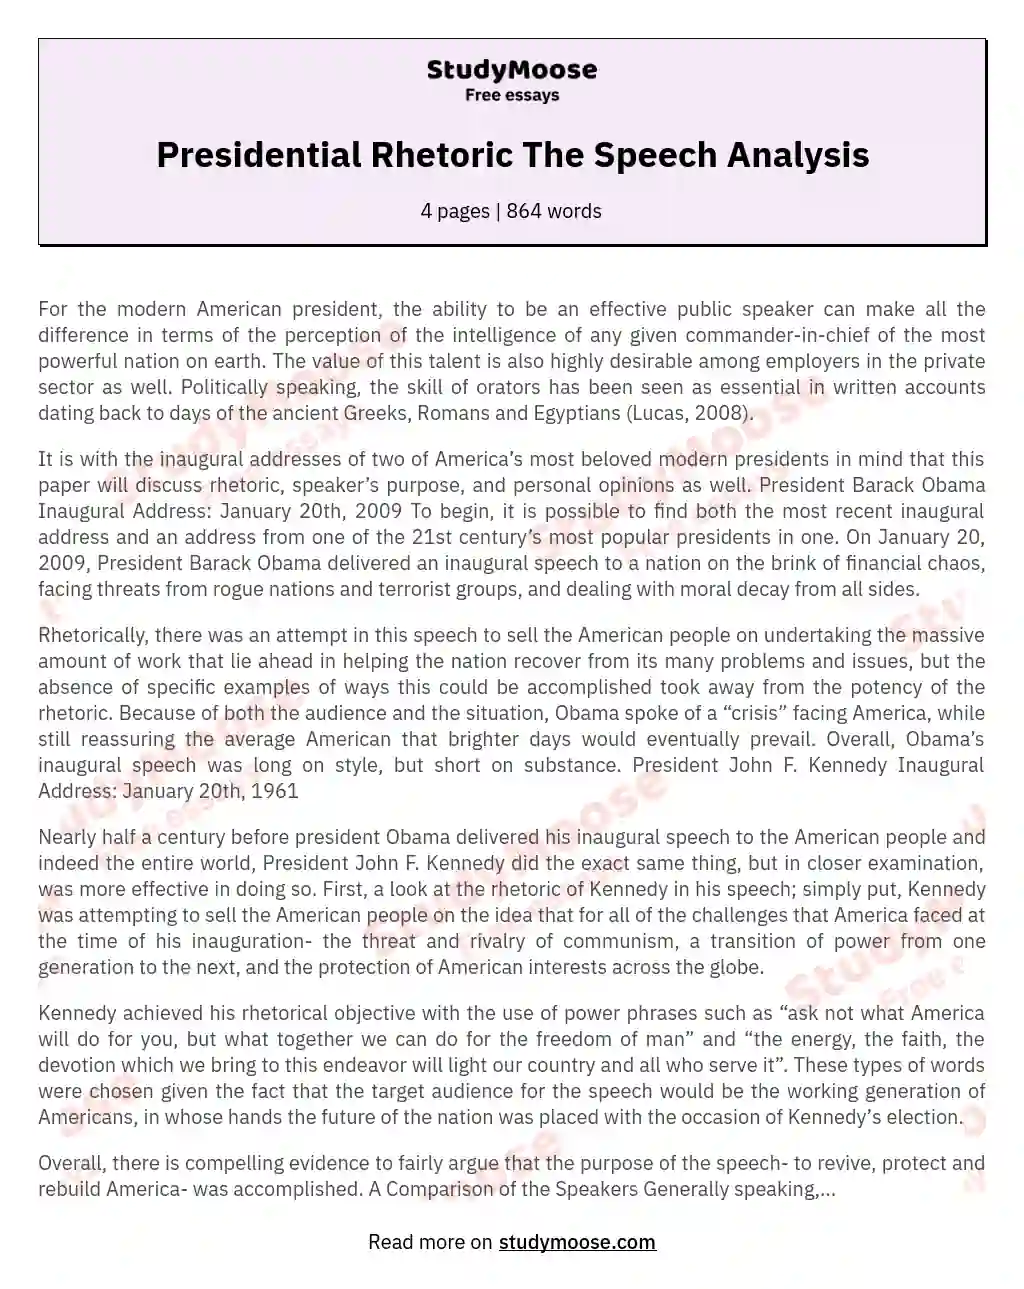 Presidential Rhetoric The Speech Analysis